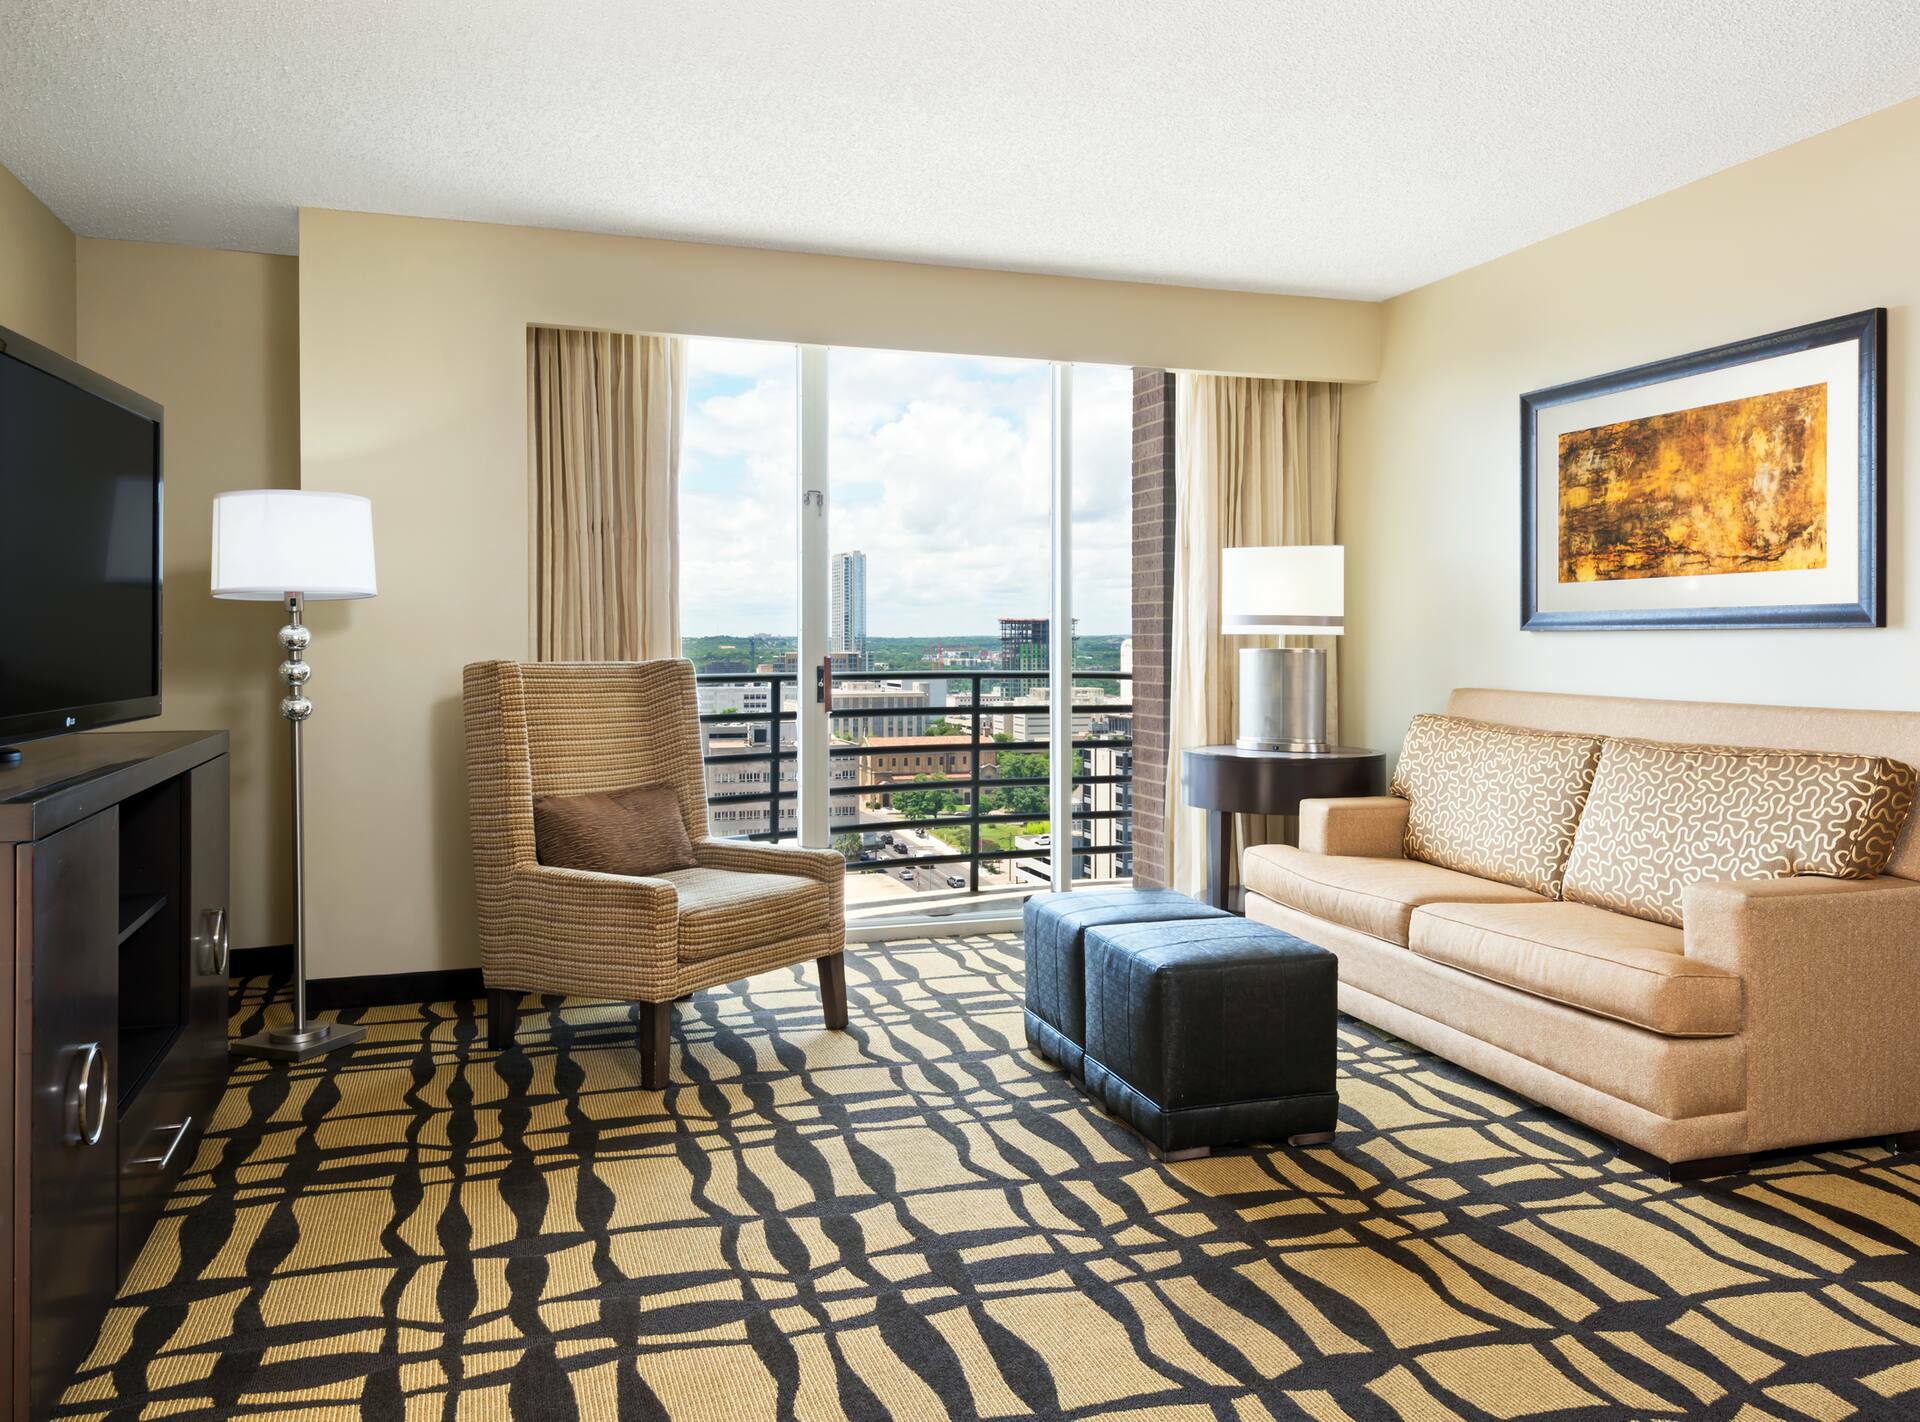 Photo of DoubleTree Suites by Hilton Hotel Austin, Austin, TX